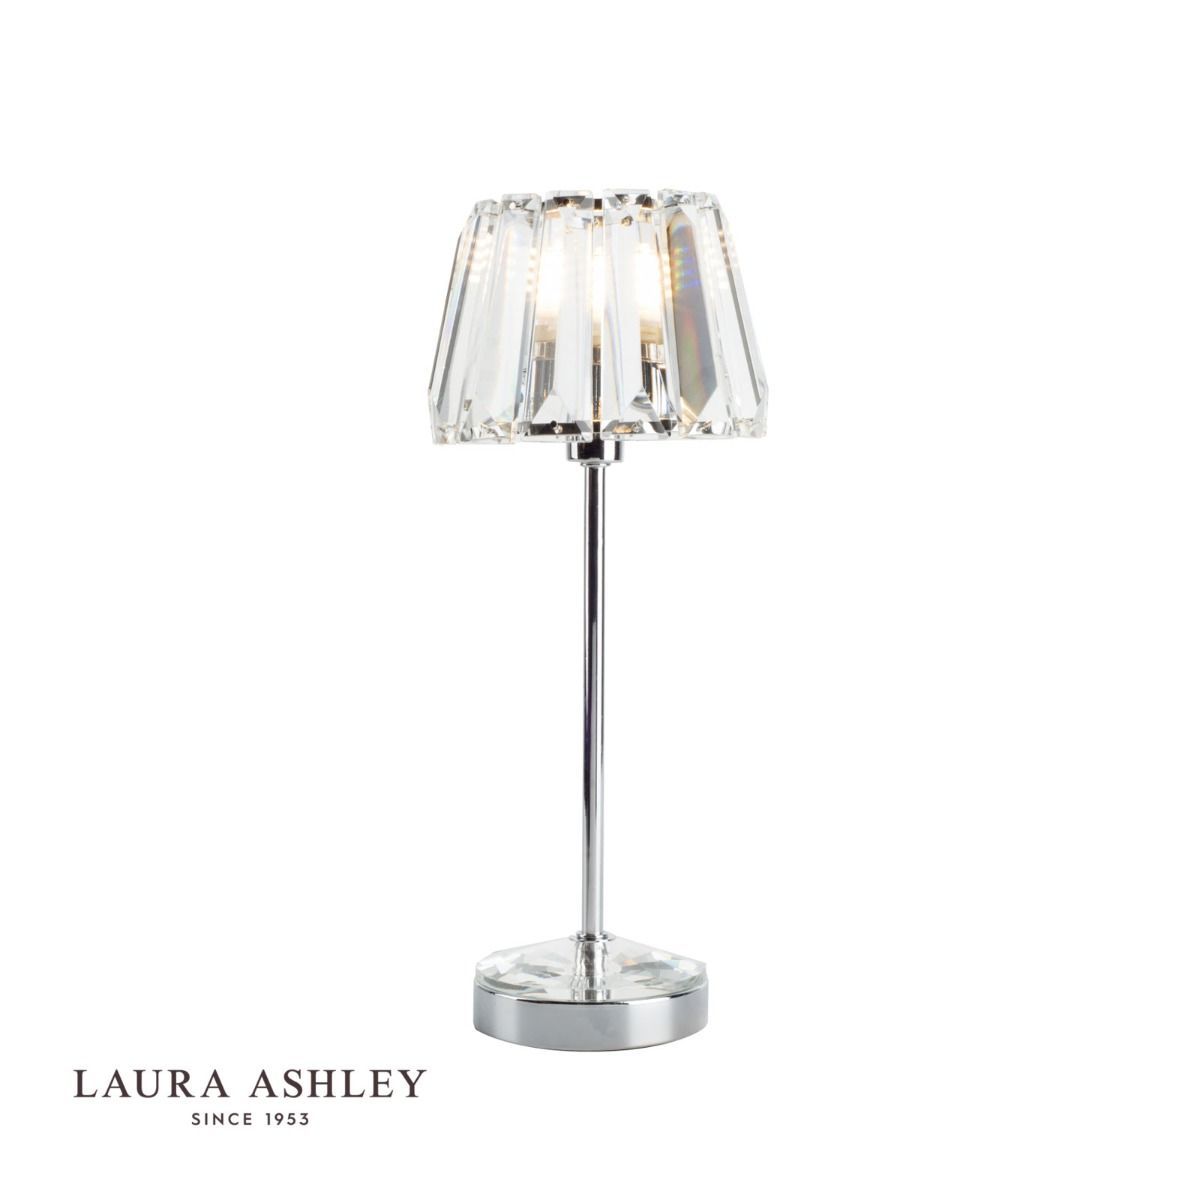 Laura Ashley Capri Small Table Lamp, Small Table Lamp With Shade